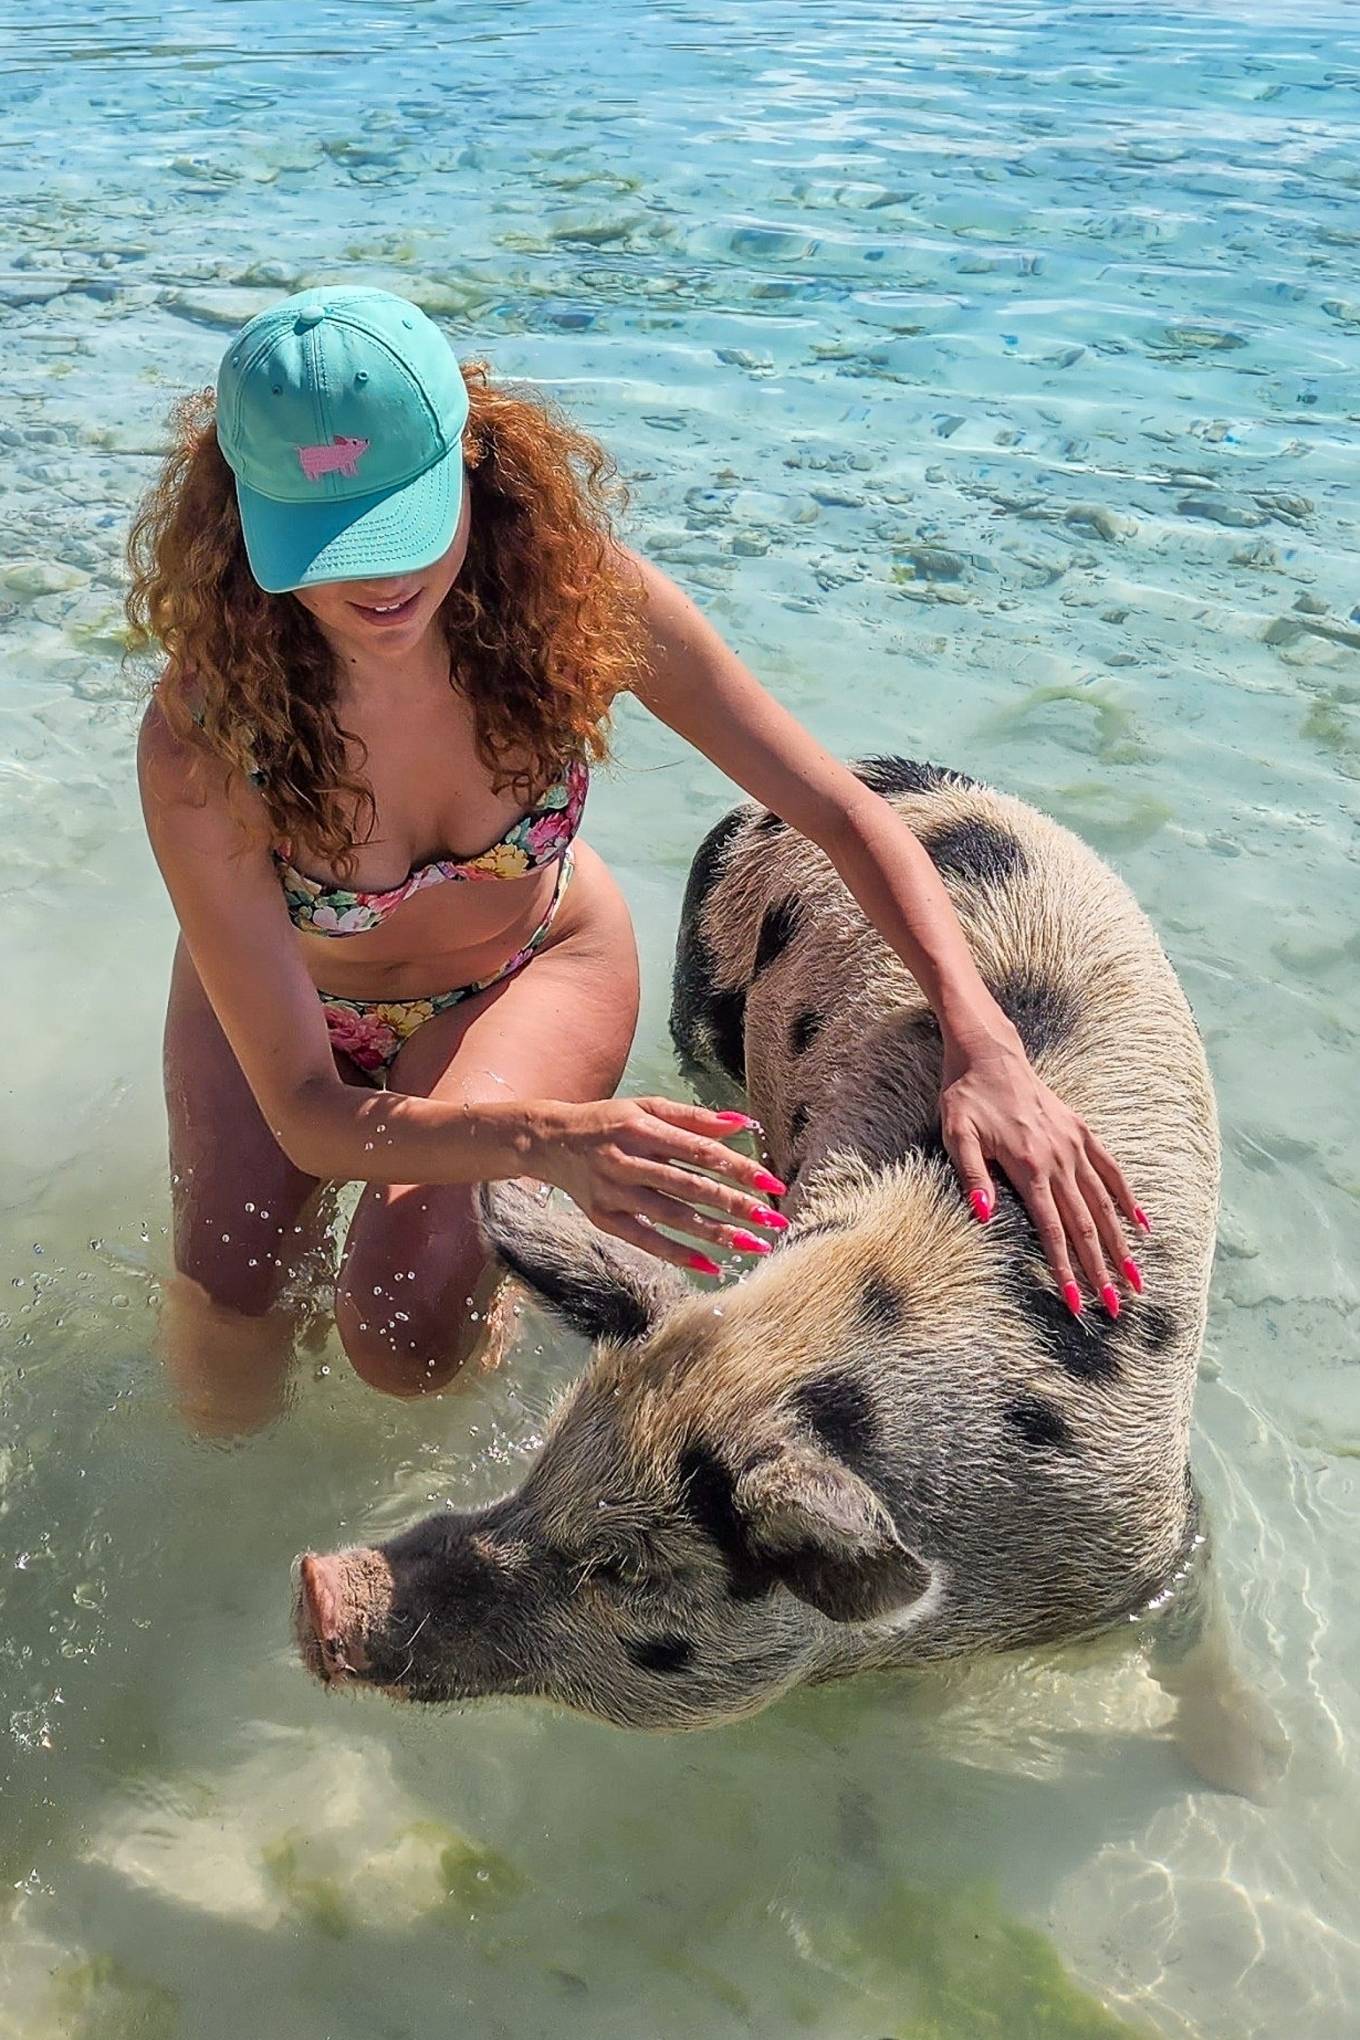 Blanca Blanco - In a bikini at Pig Beach in the Bahamas.